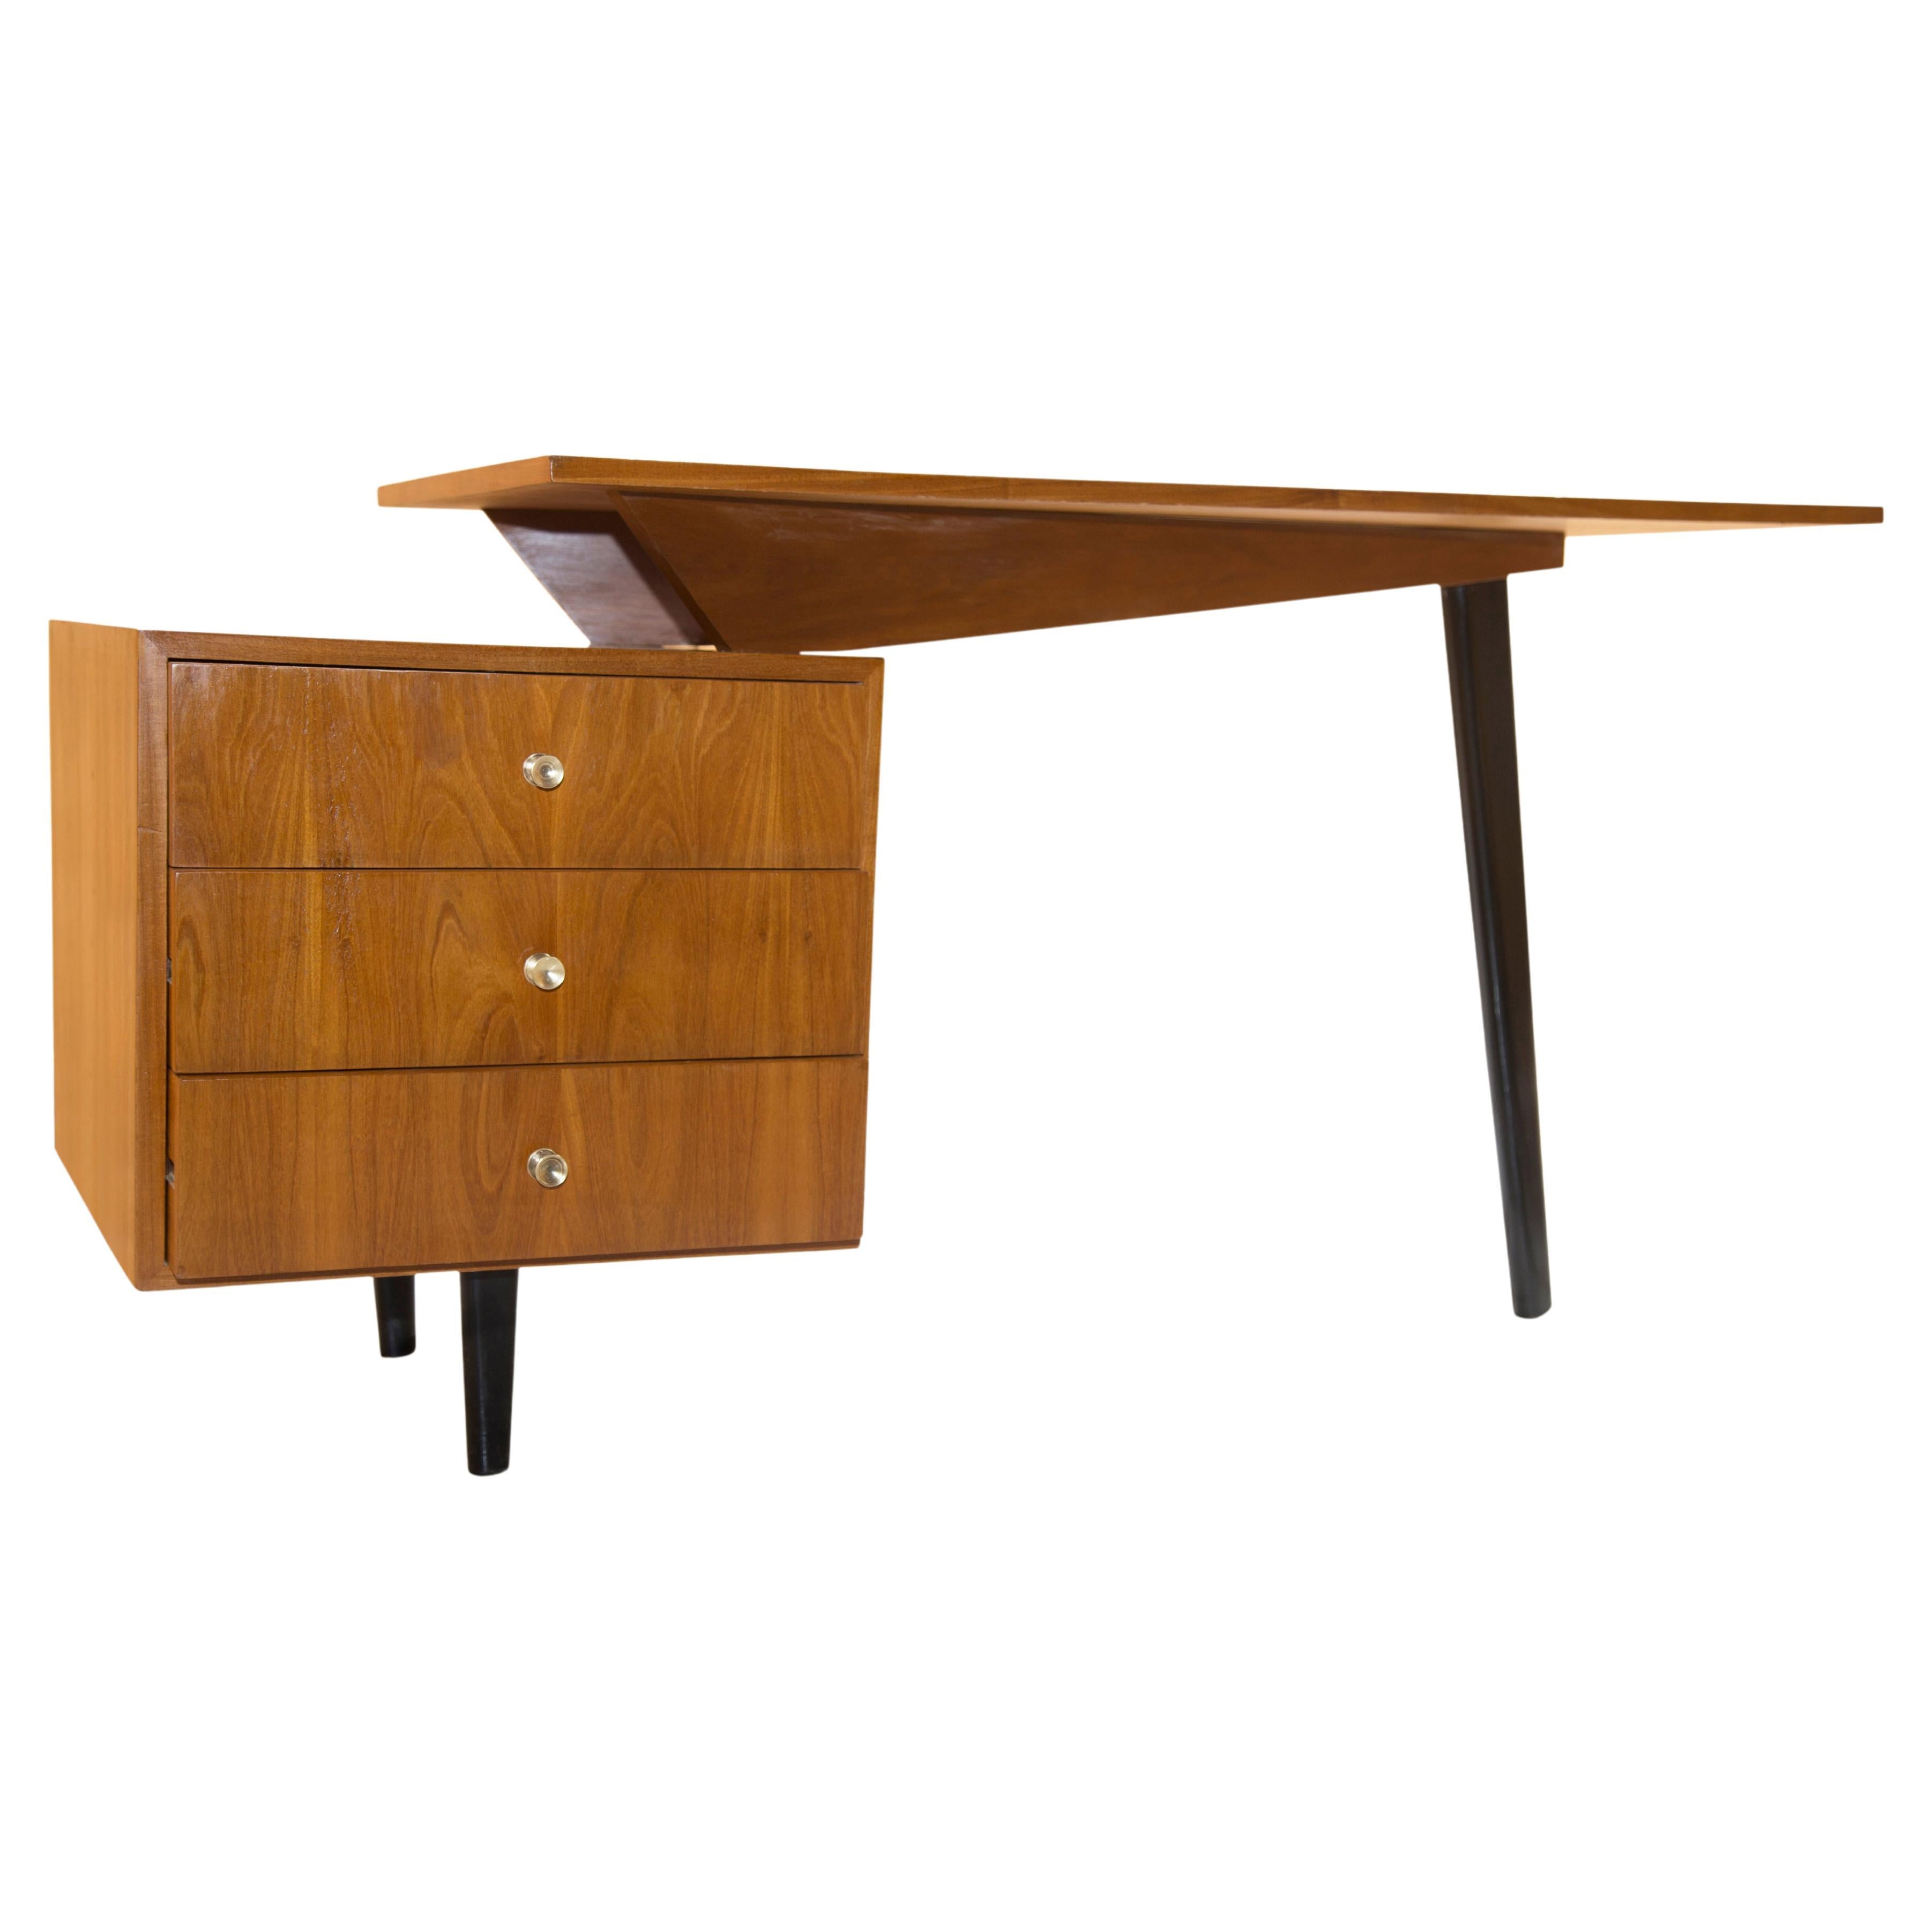 1950's Brazilian Modern Three Legged Desk in Hardwood by Moveis Fratte For Sale